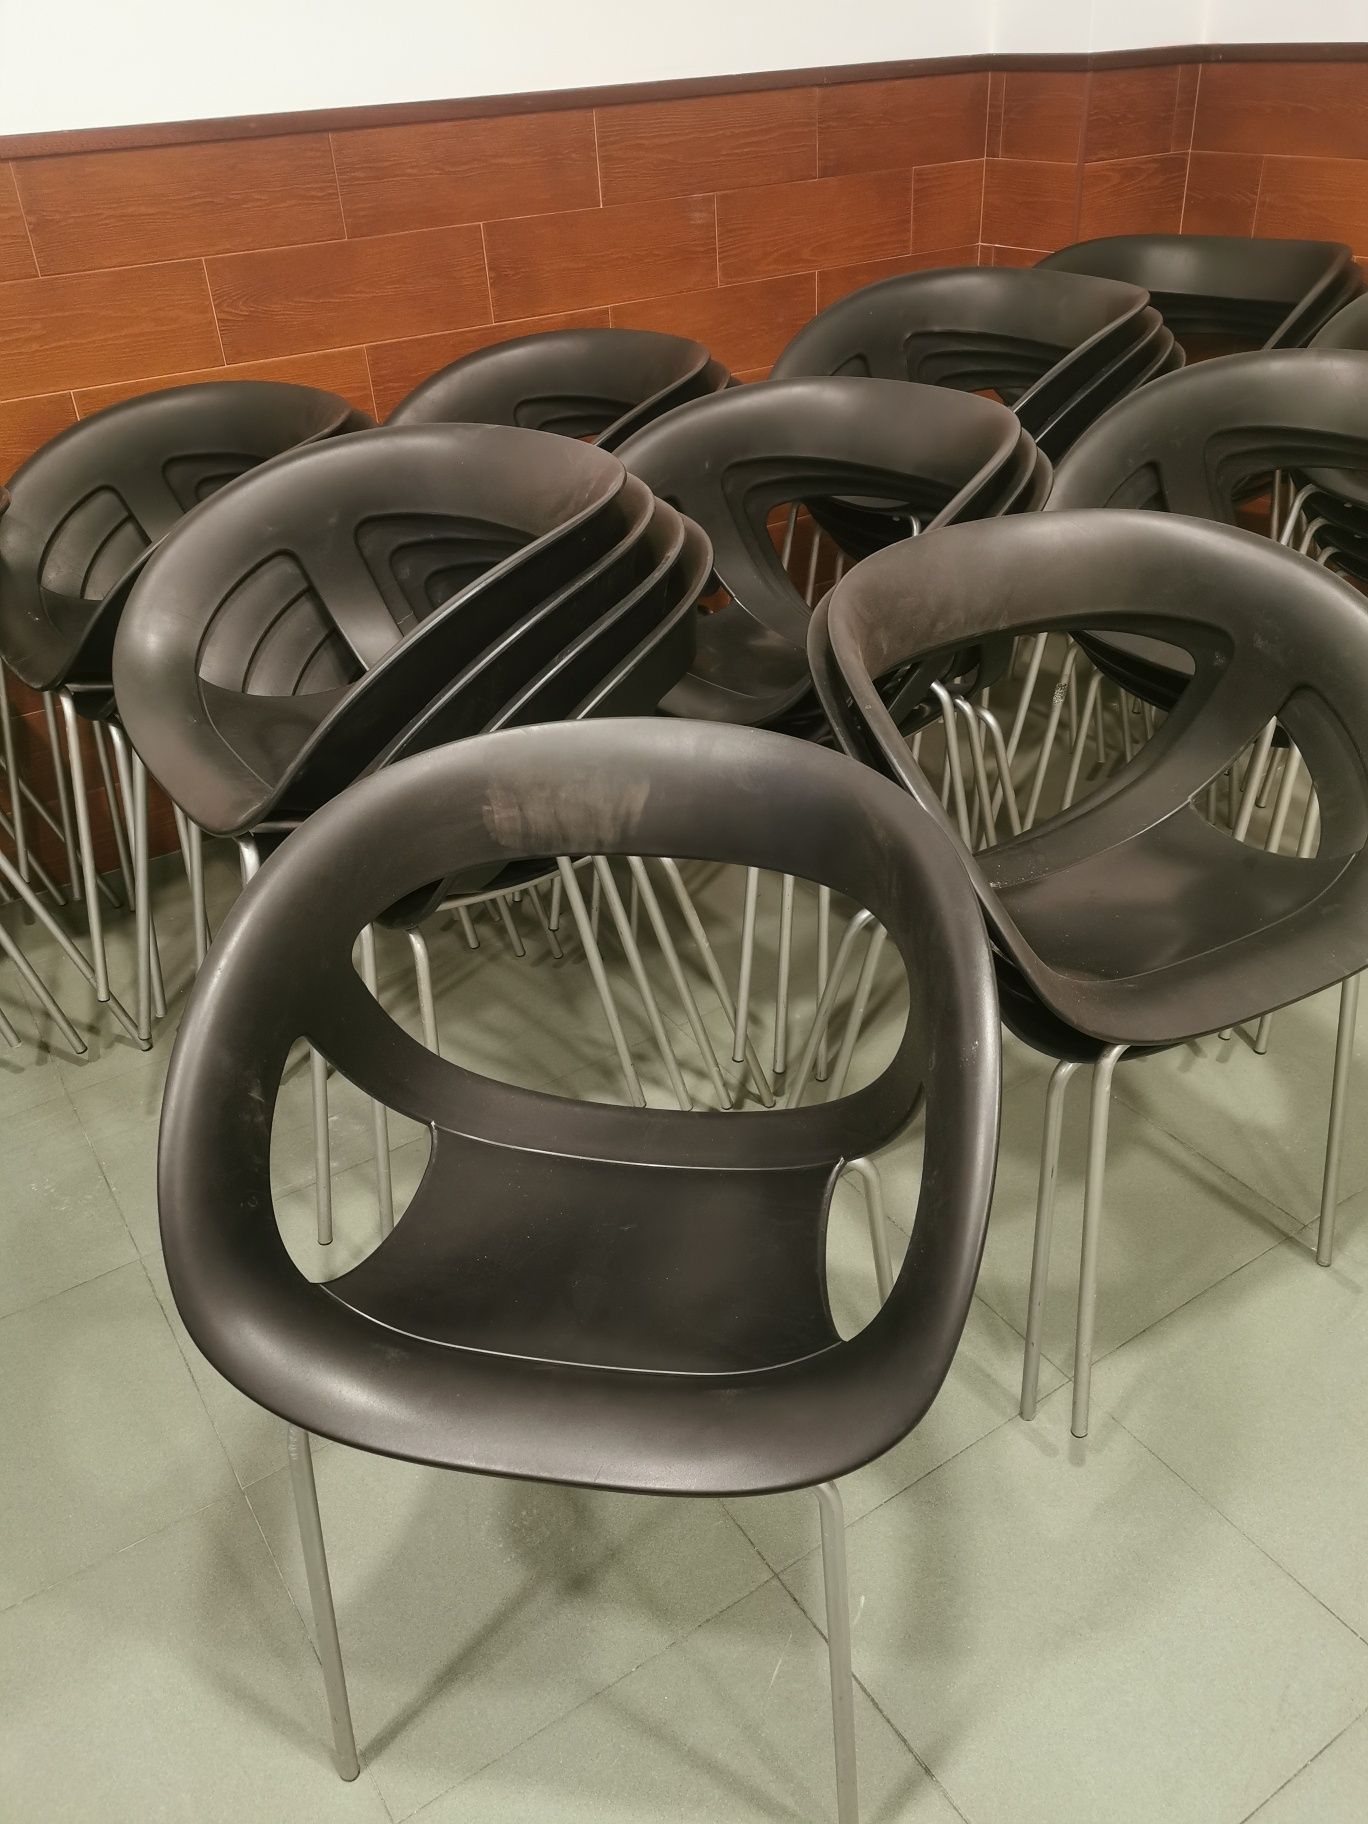 Mesas e cadeiras pastelaria restaurante